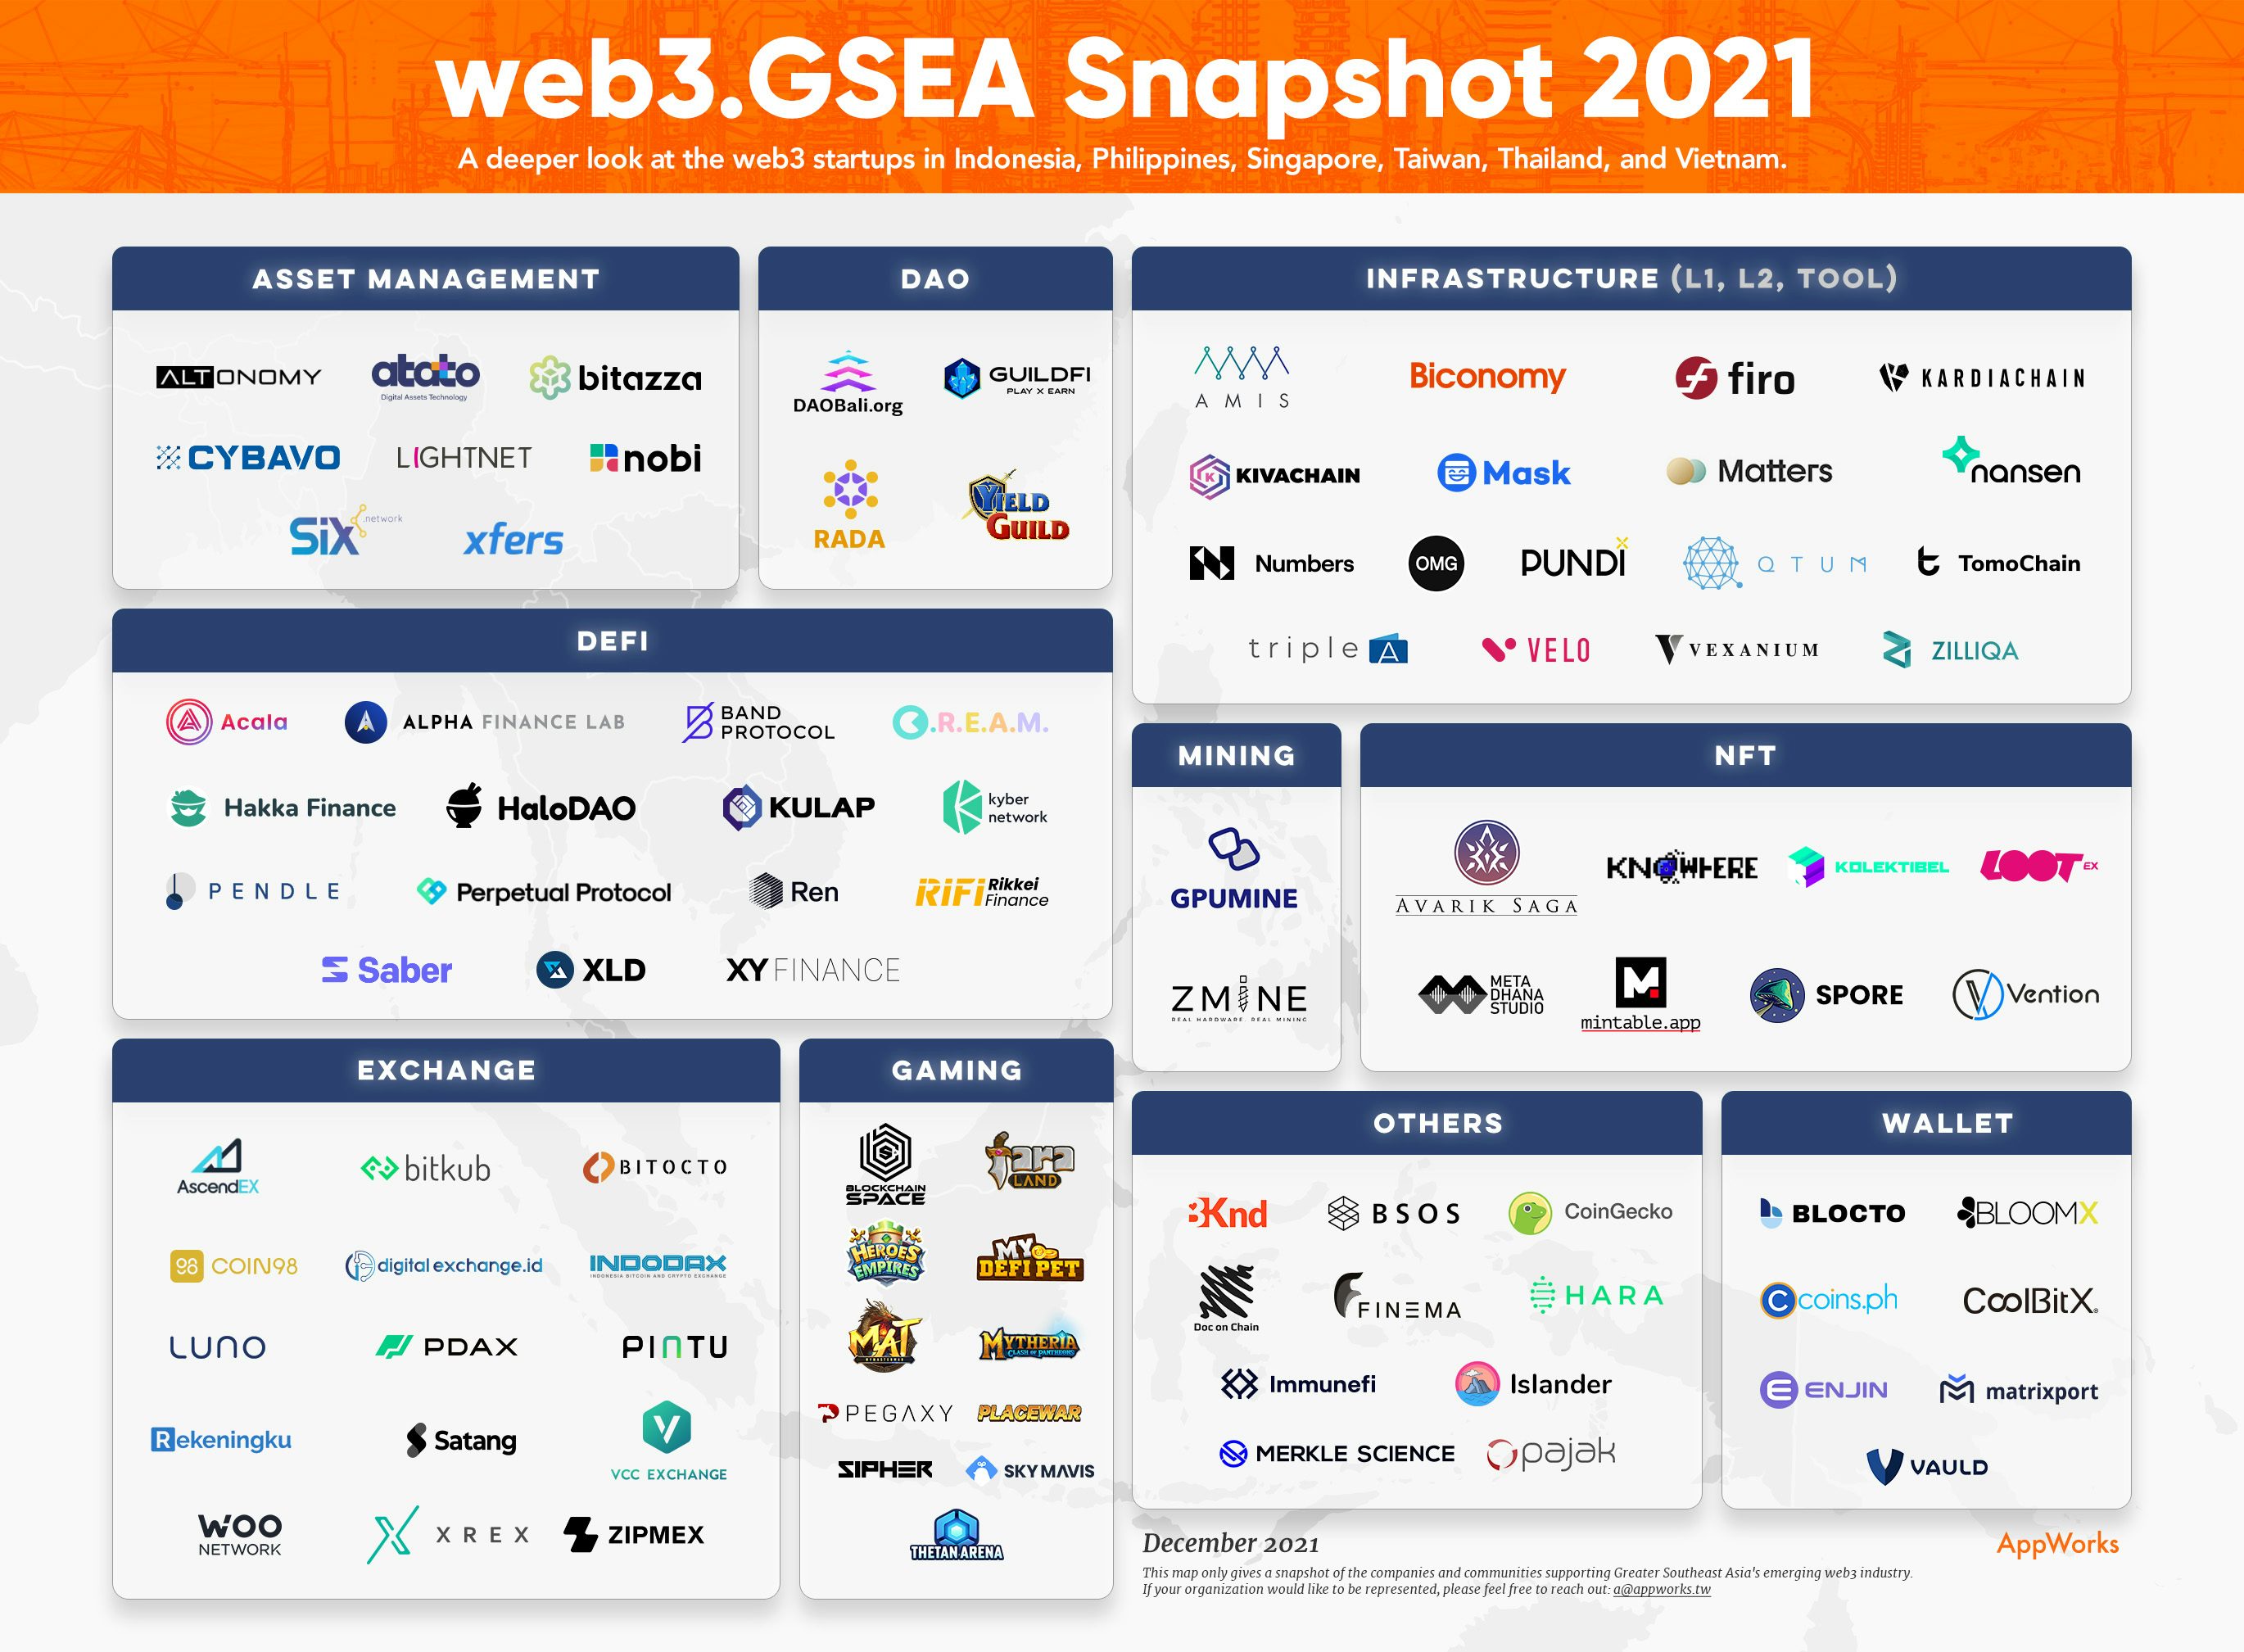 Original file for download: web3.GSEA Snapshot 2021 (https://bit.ly/32e8lKQ)